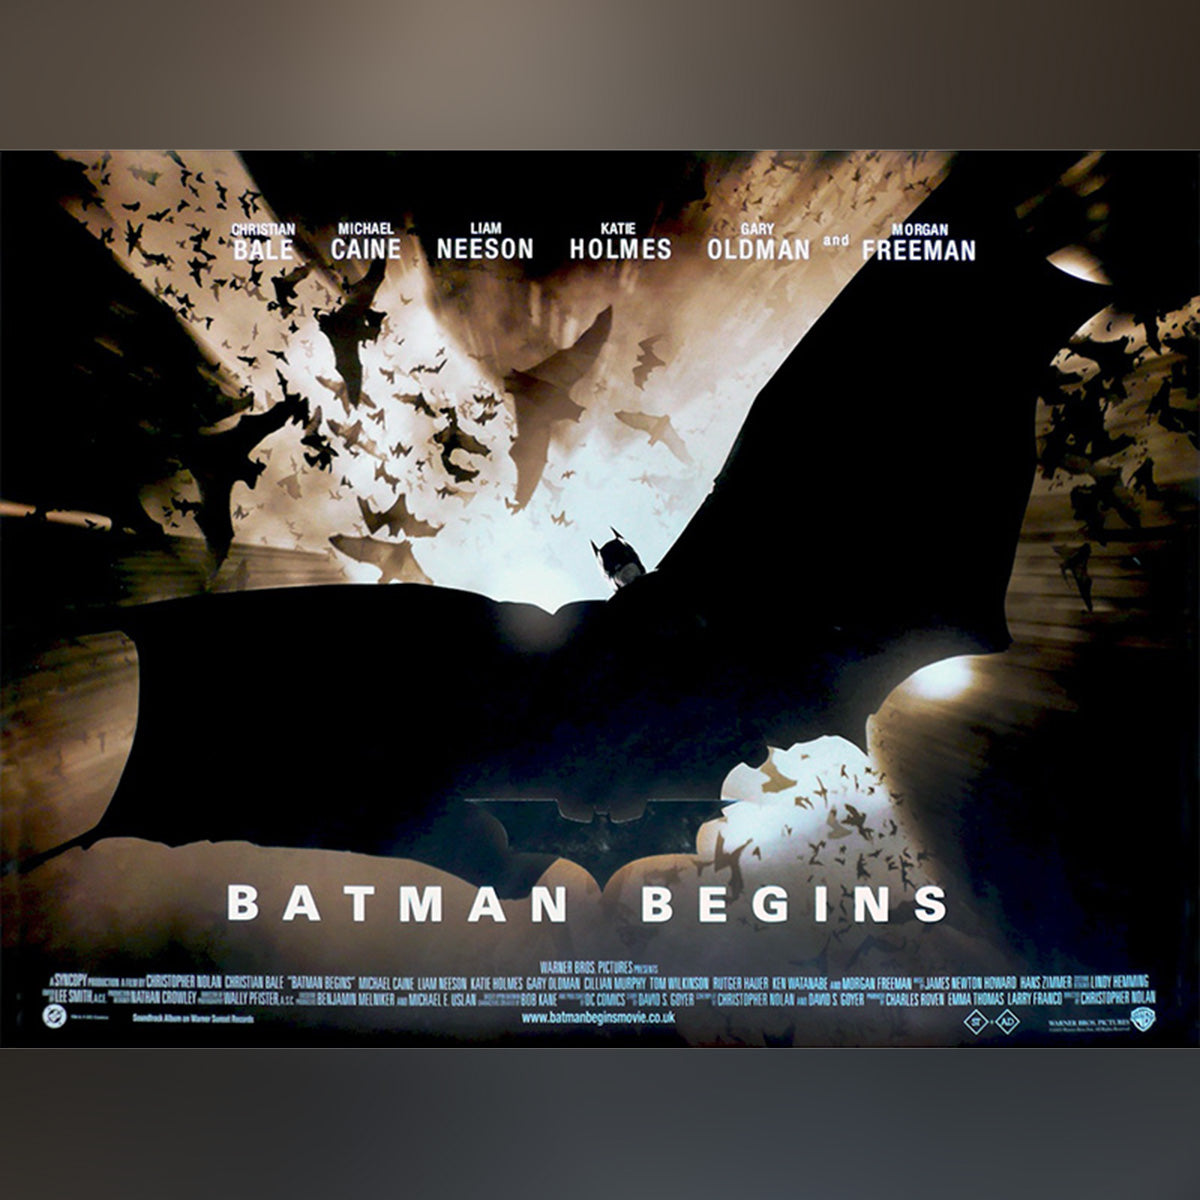 Original Movie Poster of Batman Begins (2005)